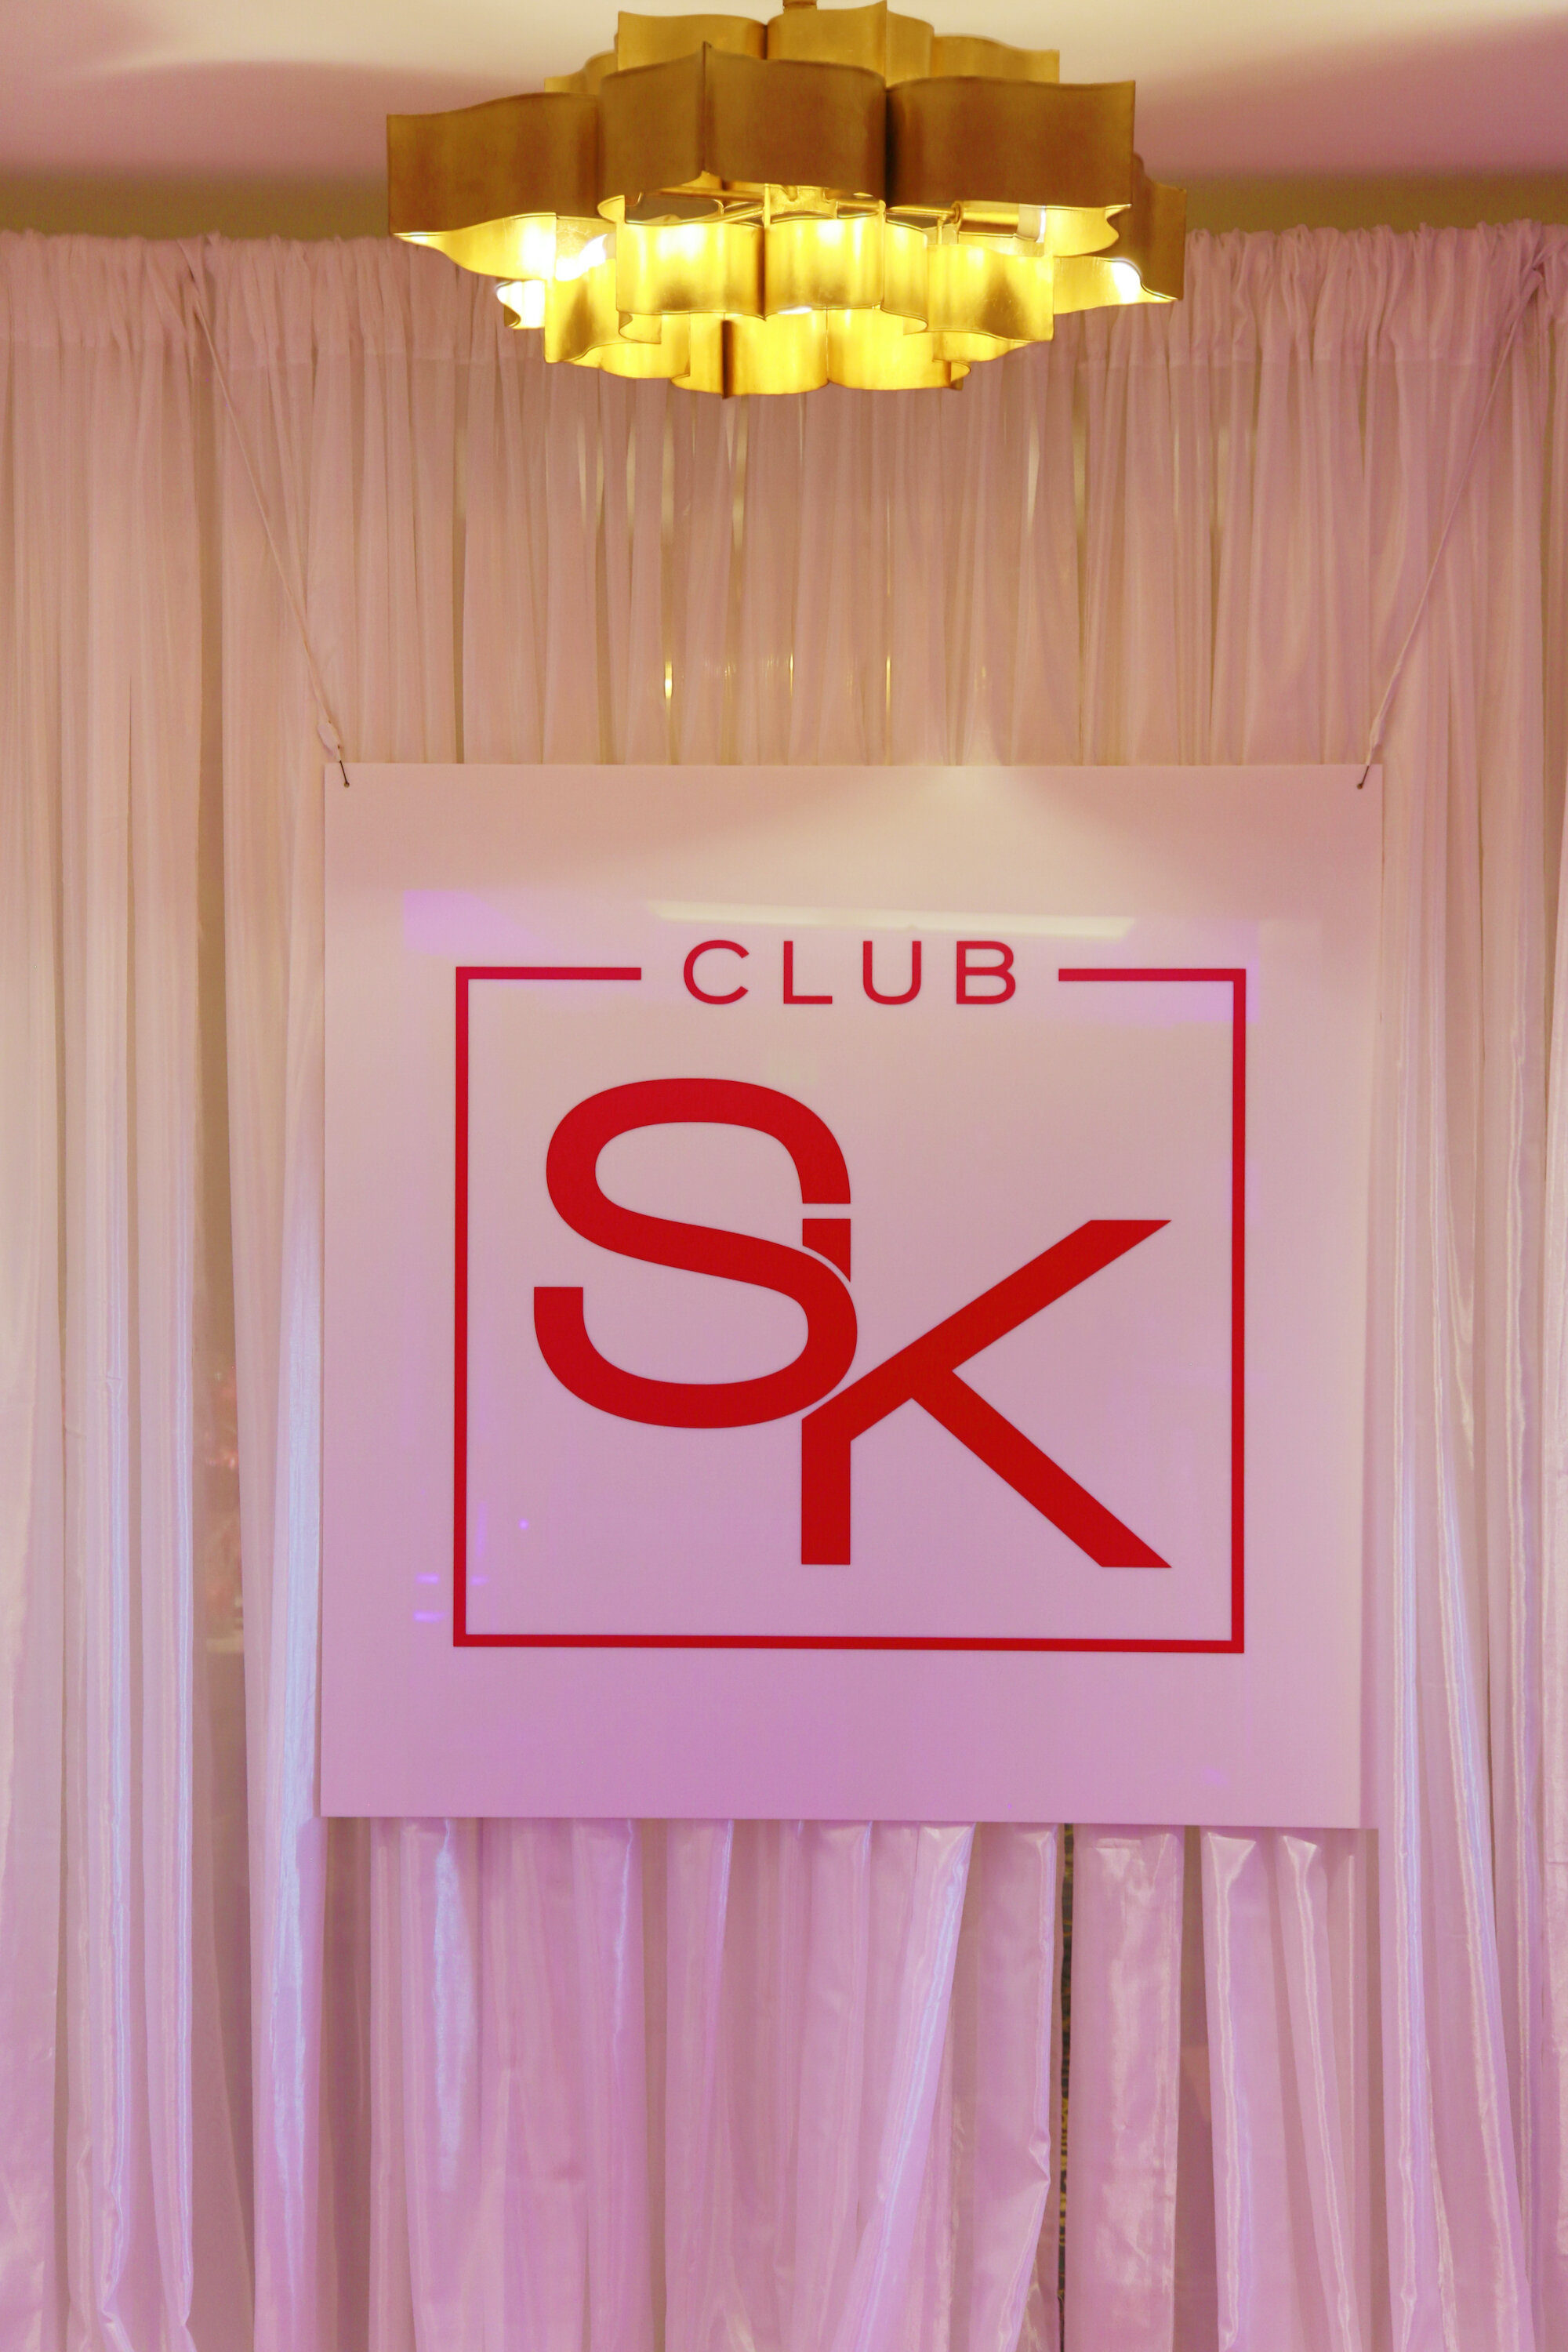 Chic Nightclub Themed Bat Mitzvah: Club SK